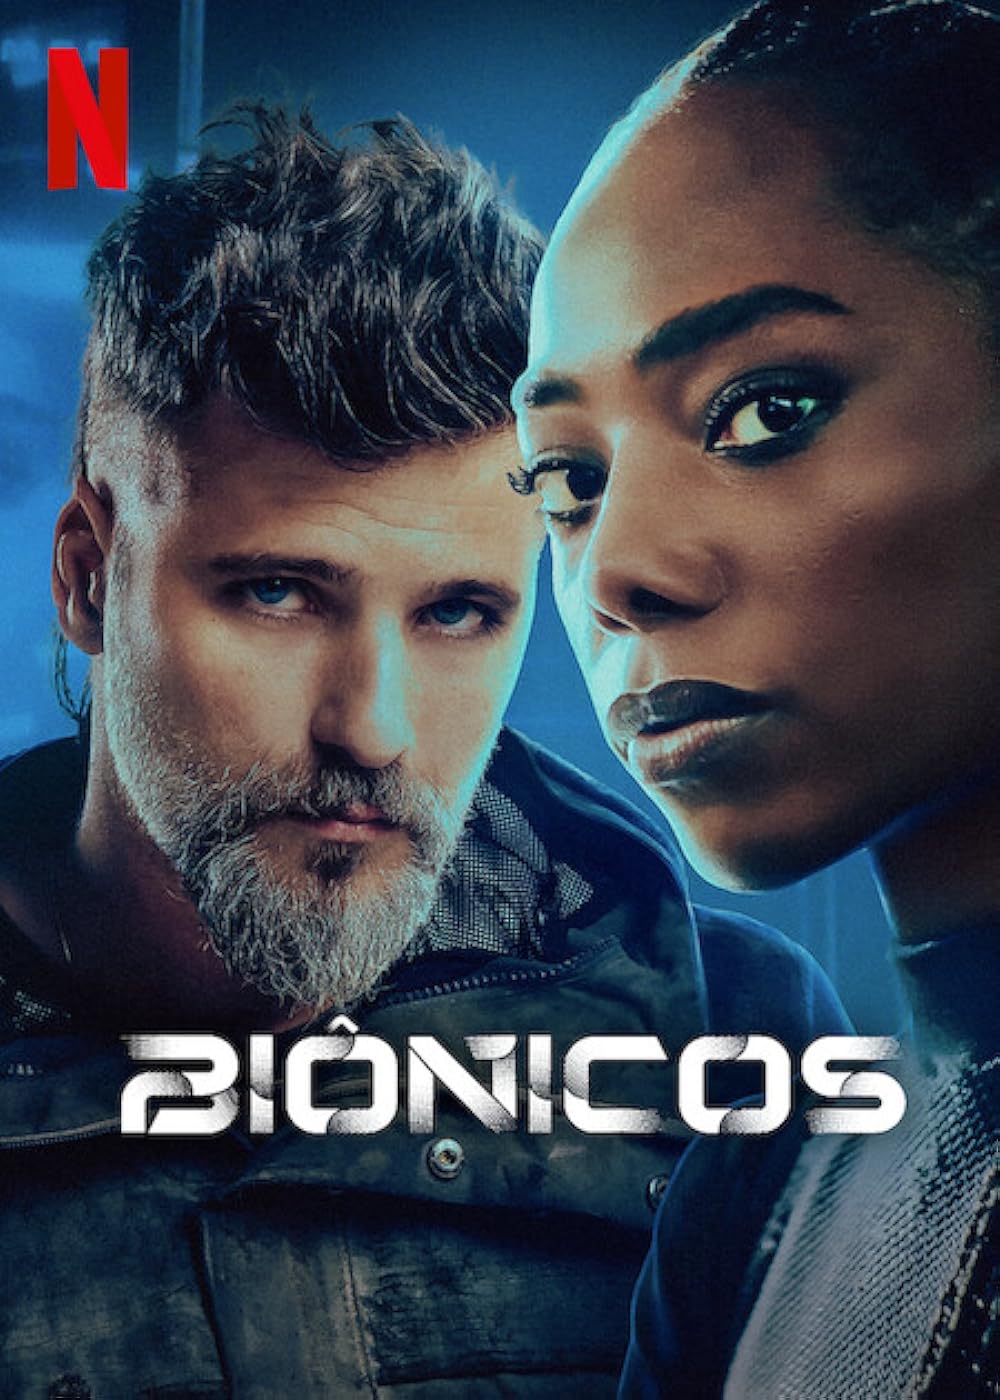 Bionic Movie | Plot, Reviews, Cast & Release Date